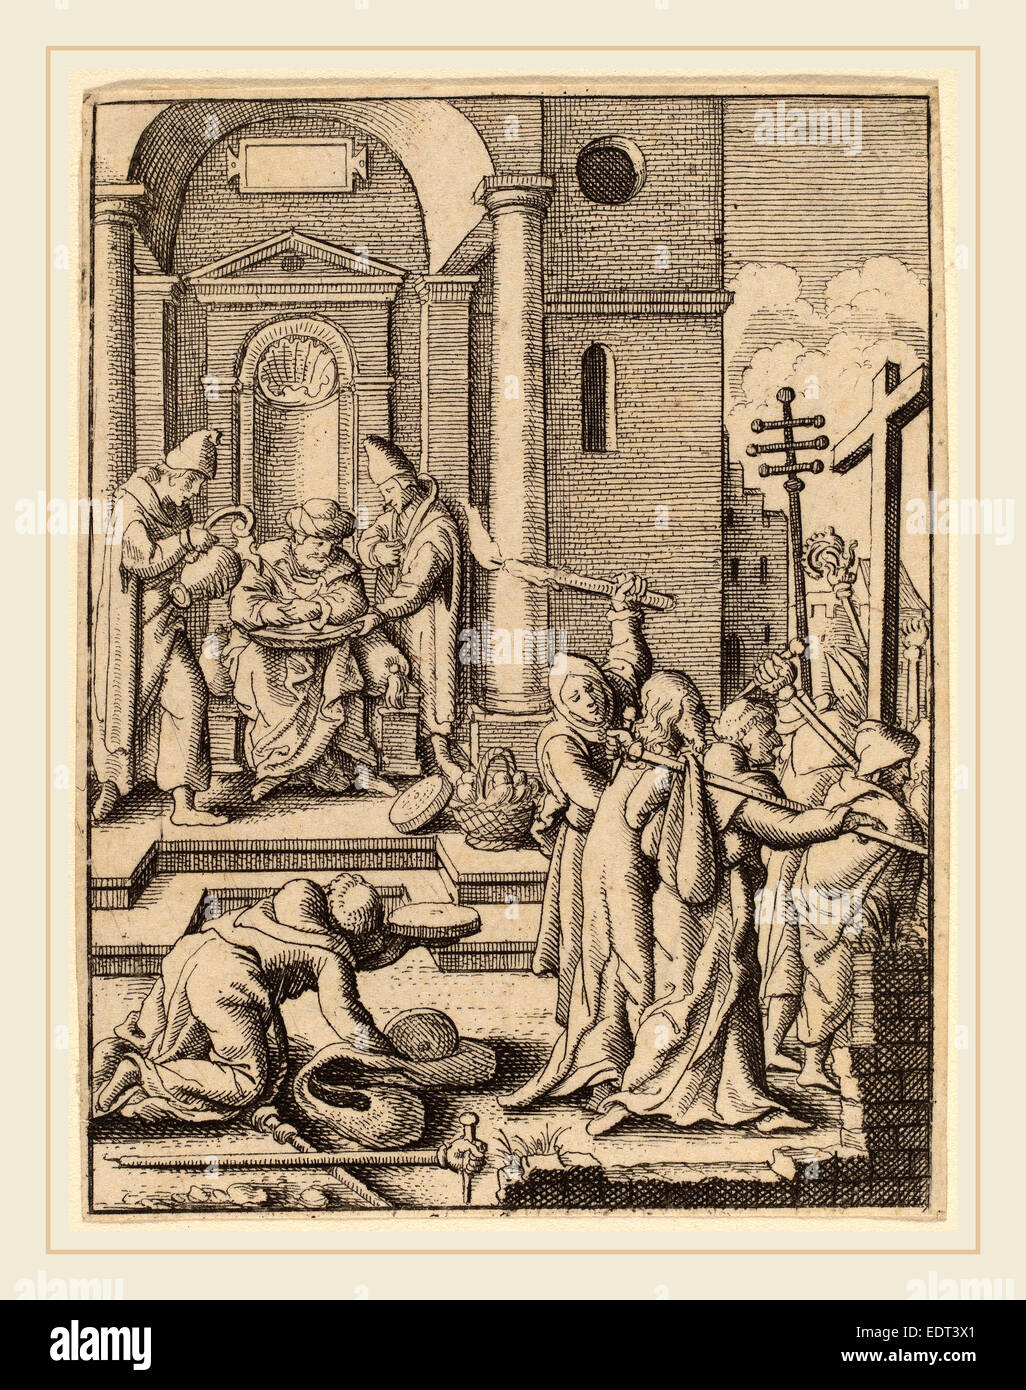 Wenceslaus Hollar (Bohemian, 1607-1677), The Washing of Hands, etching Stock Photo